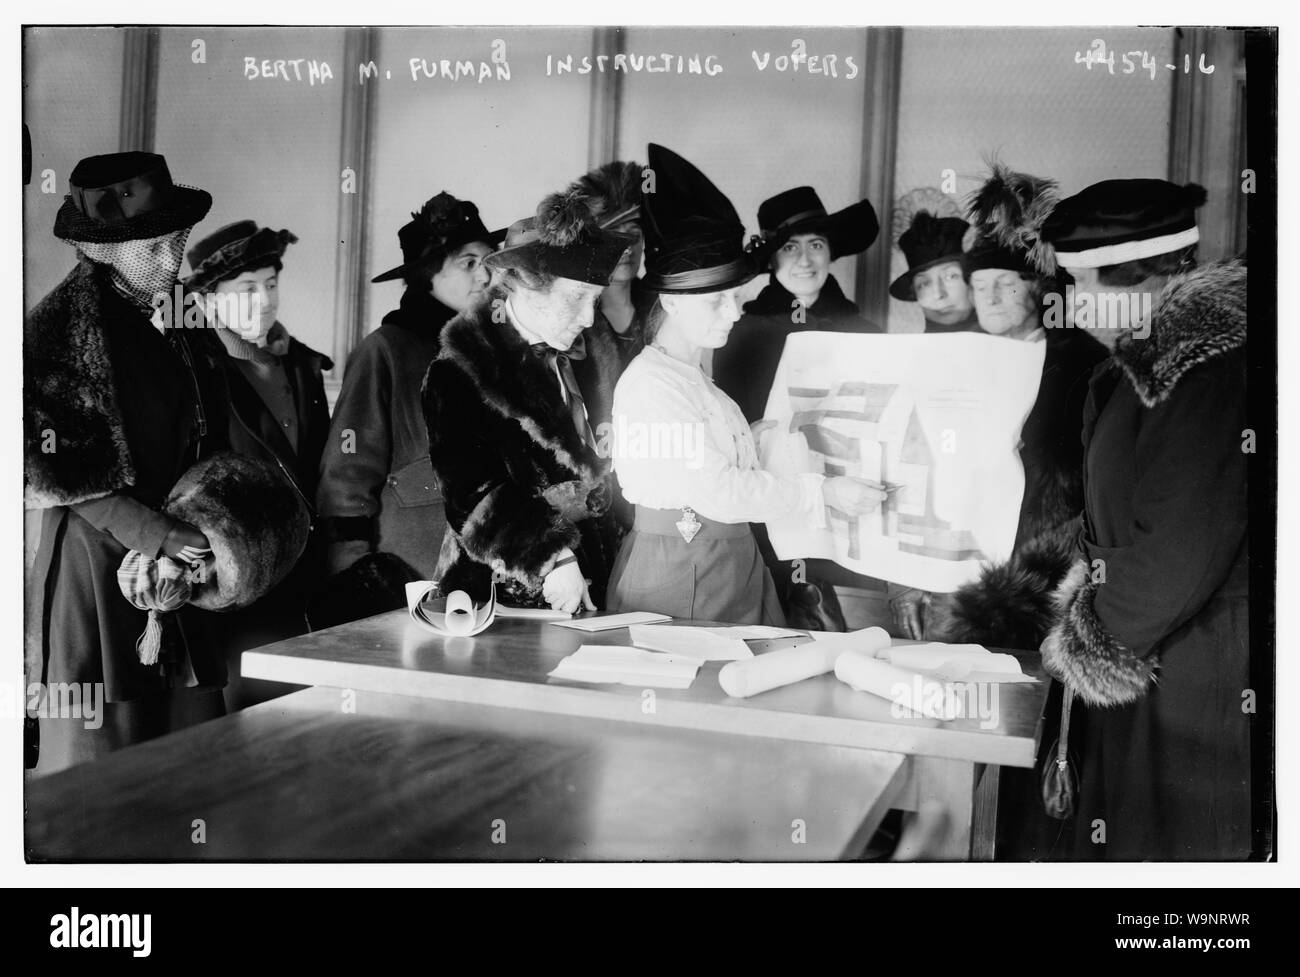 Bertha M. Furman instructing voters Stock Photo